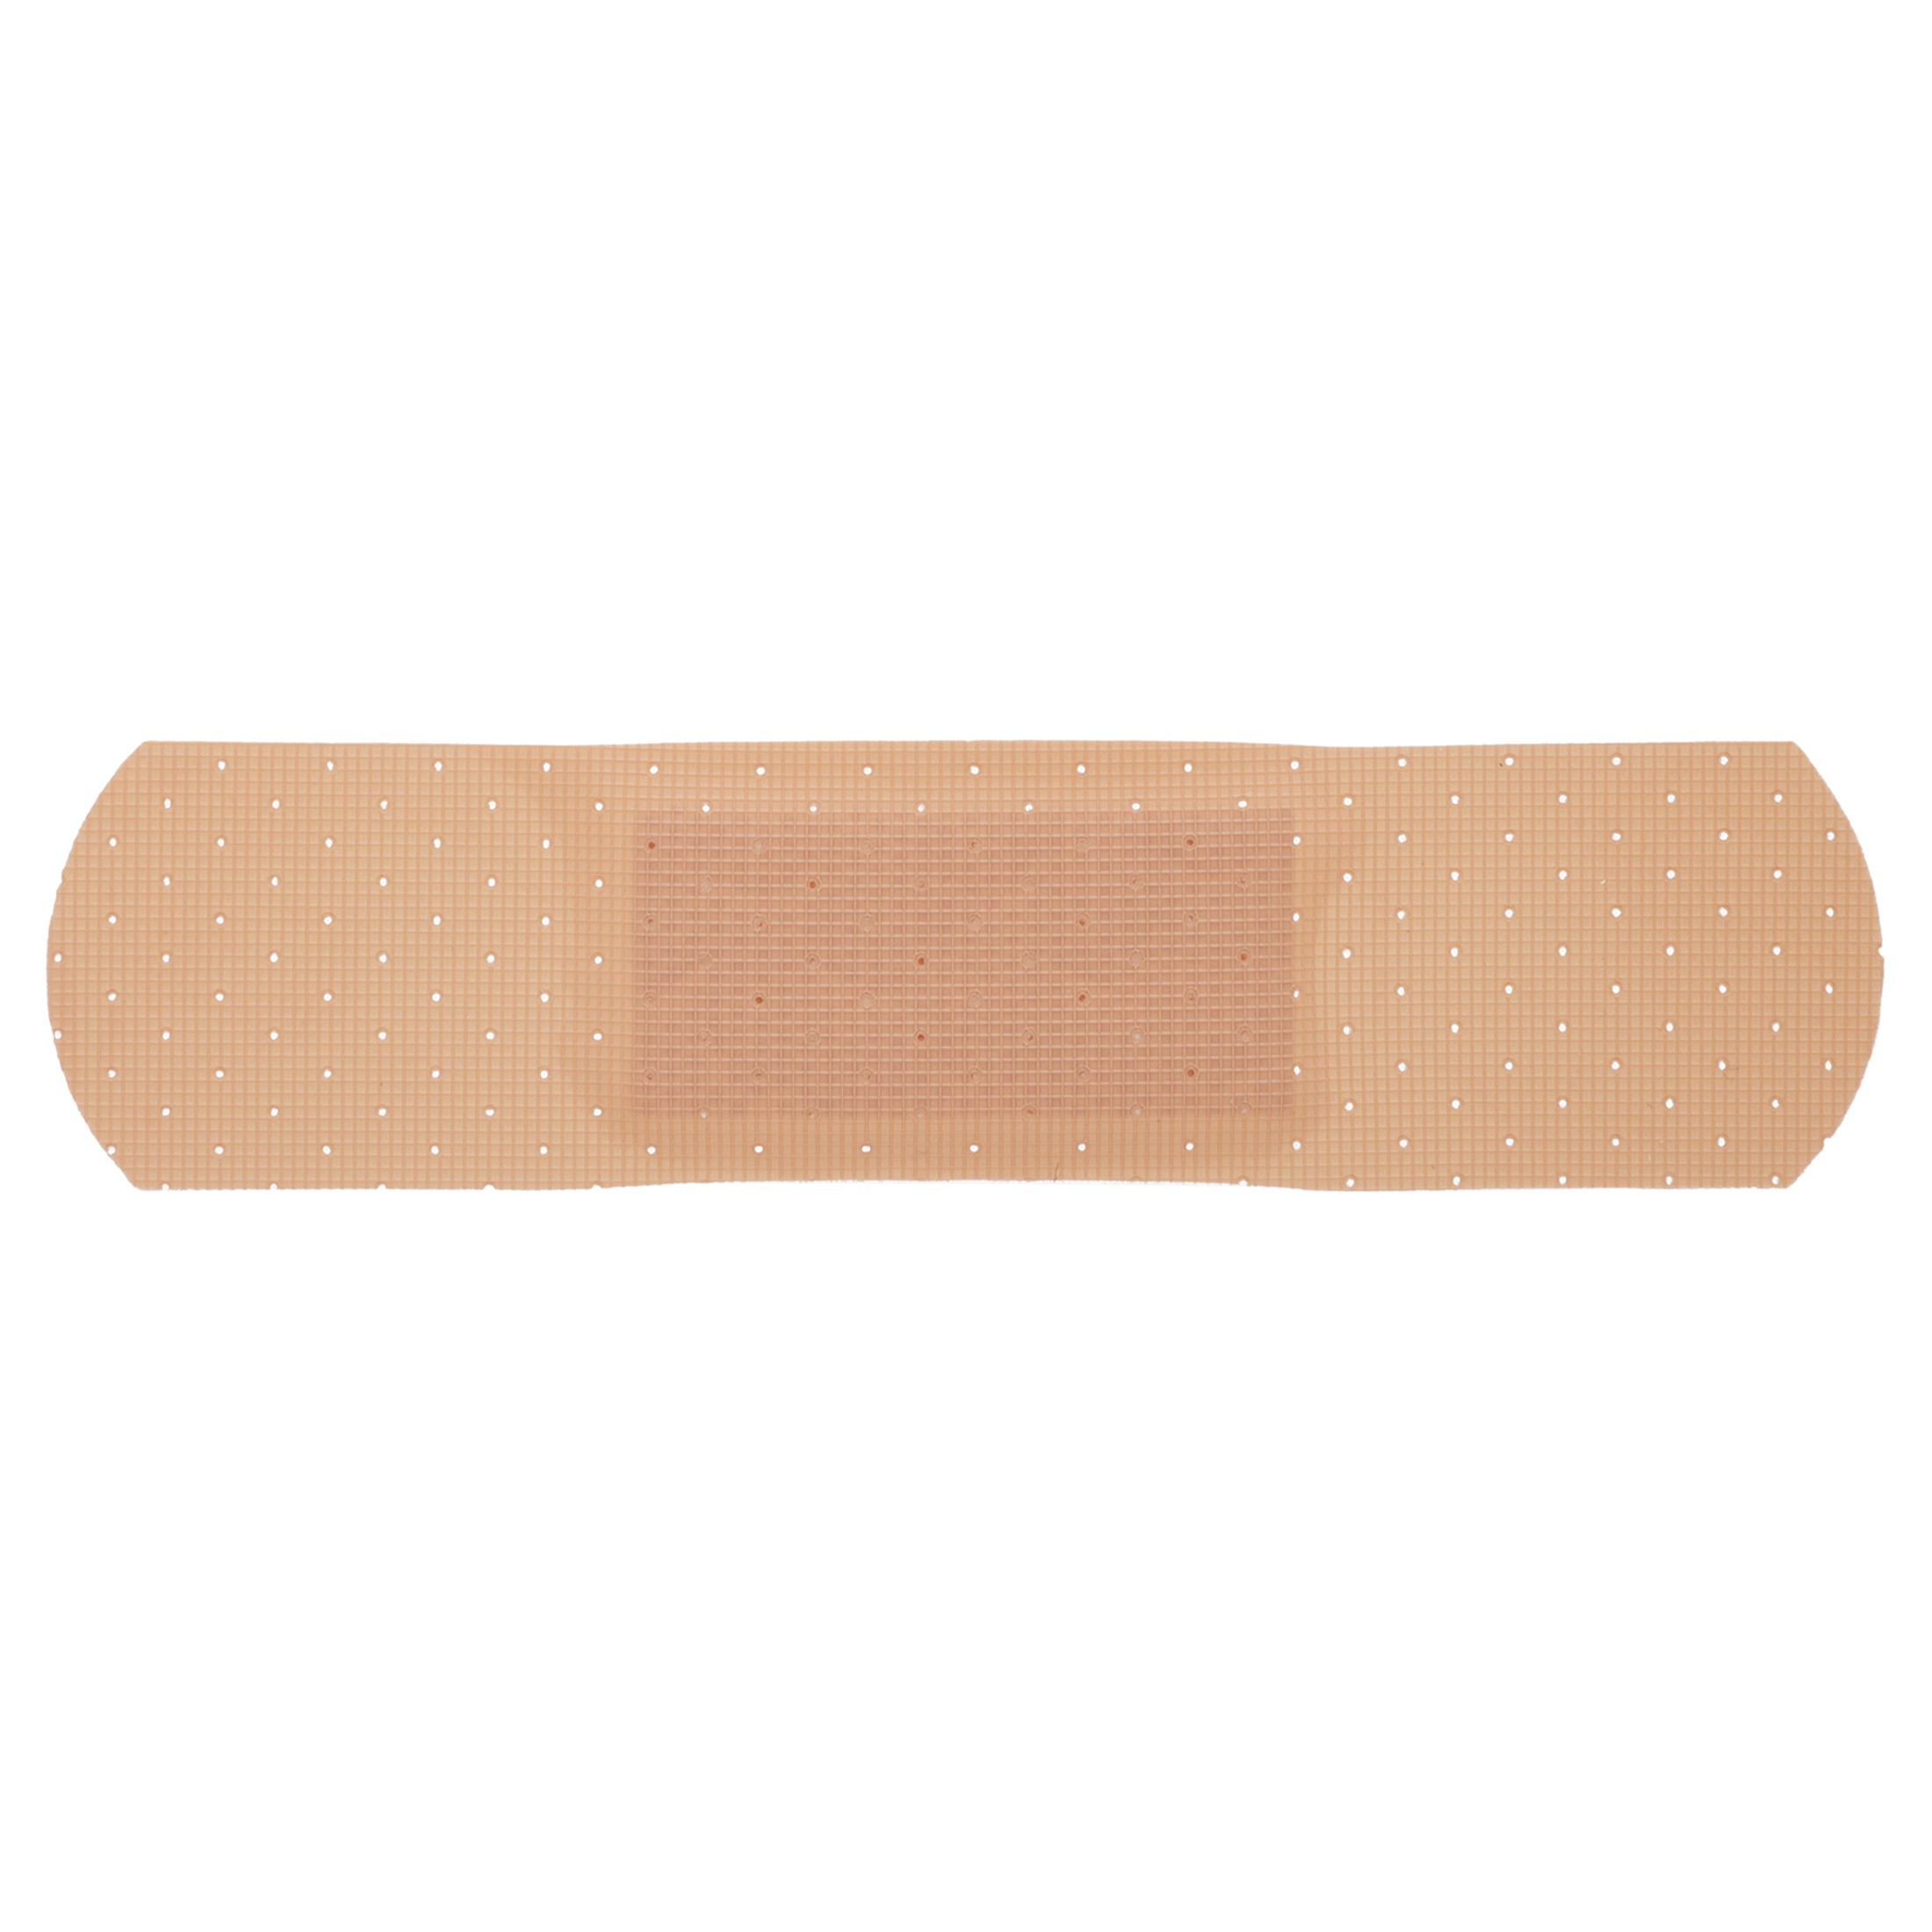 Equate Antibacterial Medium Plastic Bandages, 60 Count - image 4 of 7